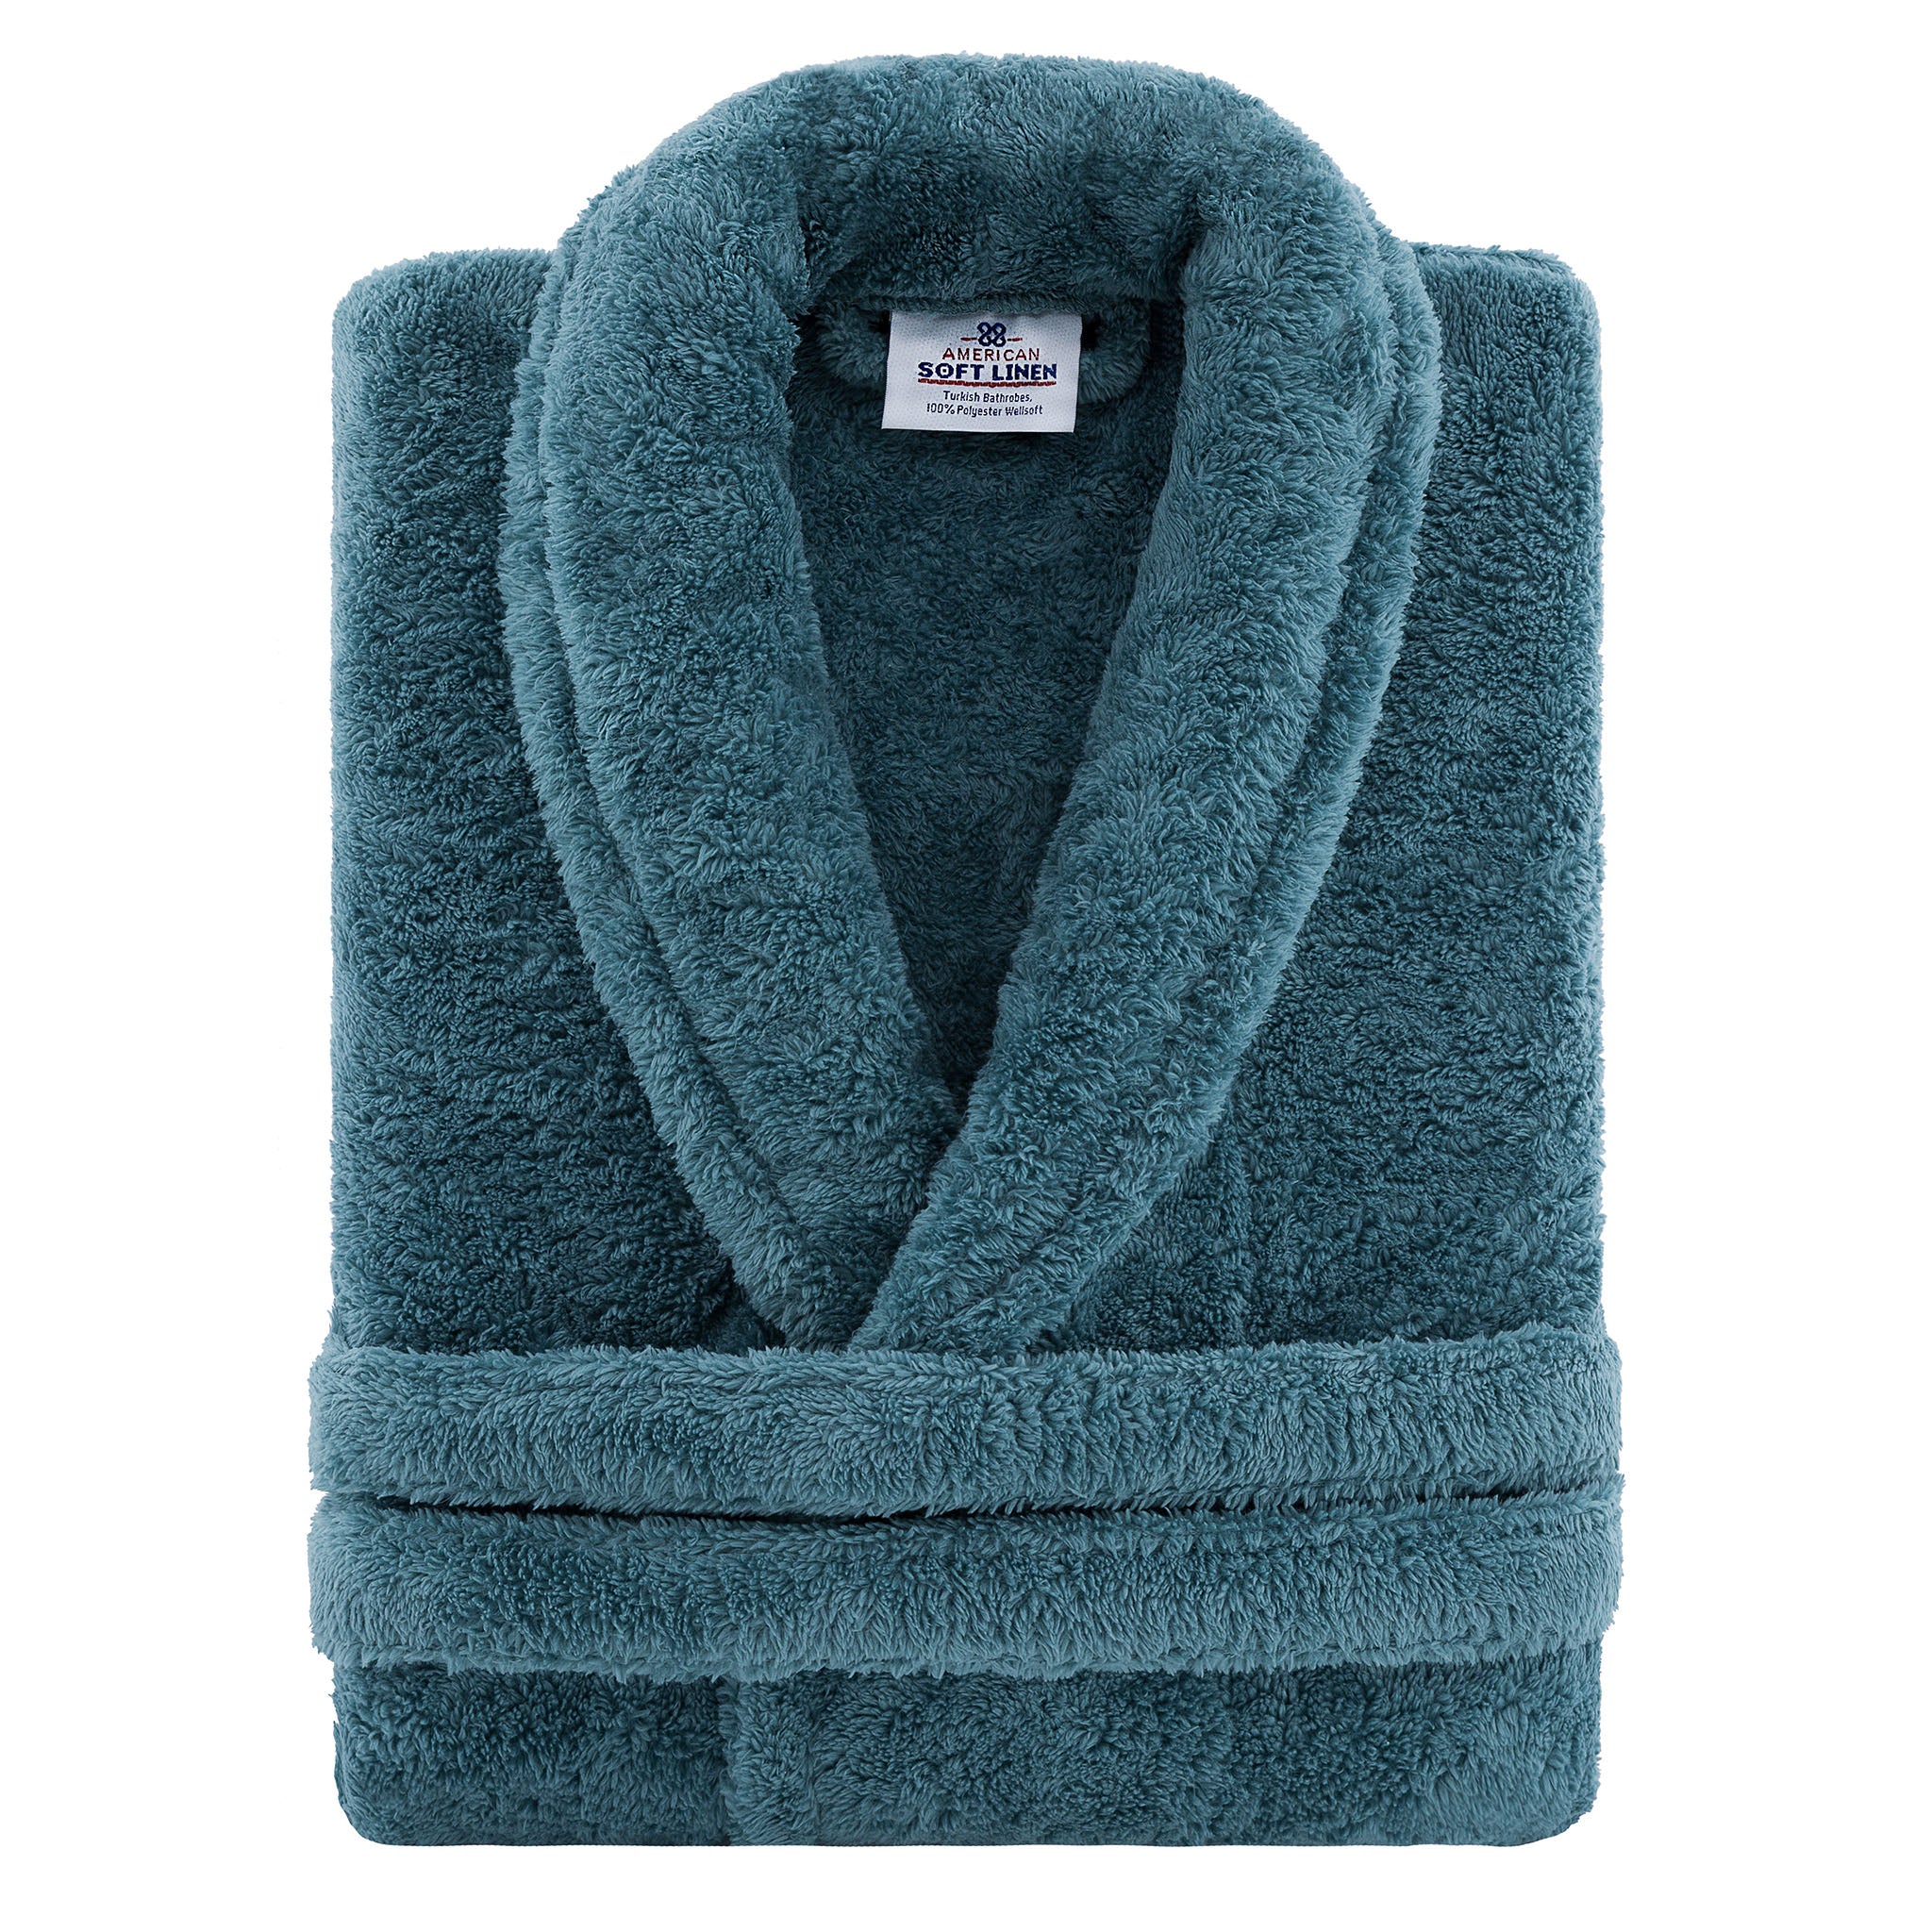 American Soft Linen Super Soft, Absorbent and Fluffy, Unisex Fleece Bathrobe M-L-colonial-blue-3